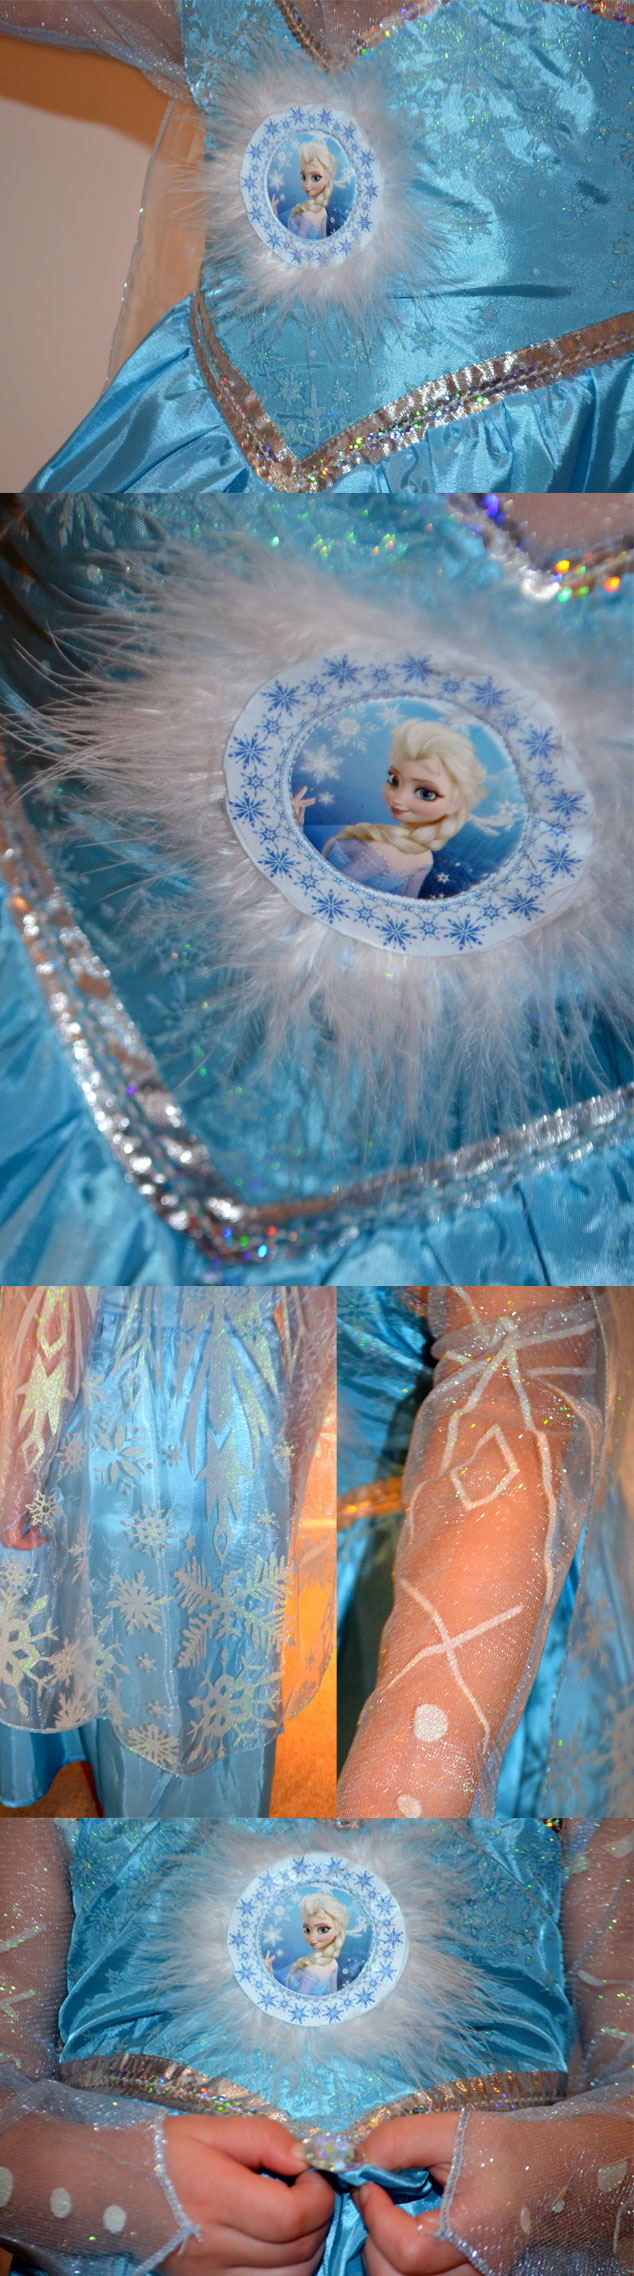 Frozen-Elsa-Dress-Details